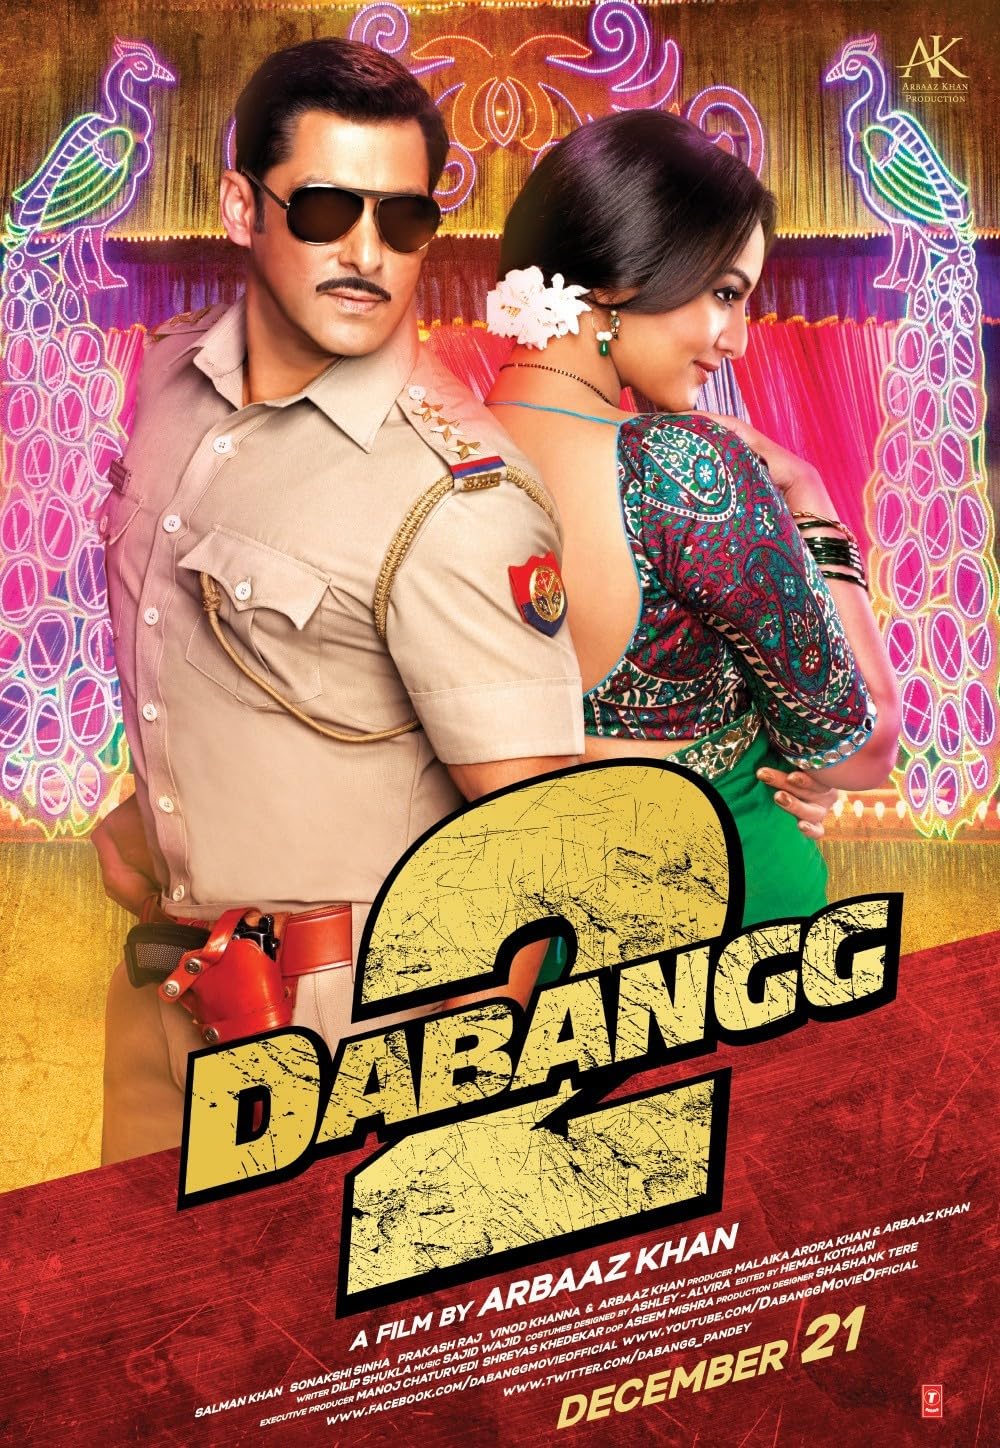 assets/img/movie/Dabangg 2 2012 Hindi Full Movie Watch Online HD Print Free Download.jpg 9xmovies